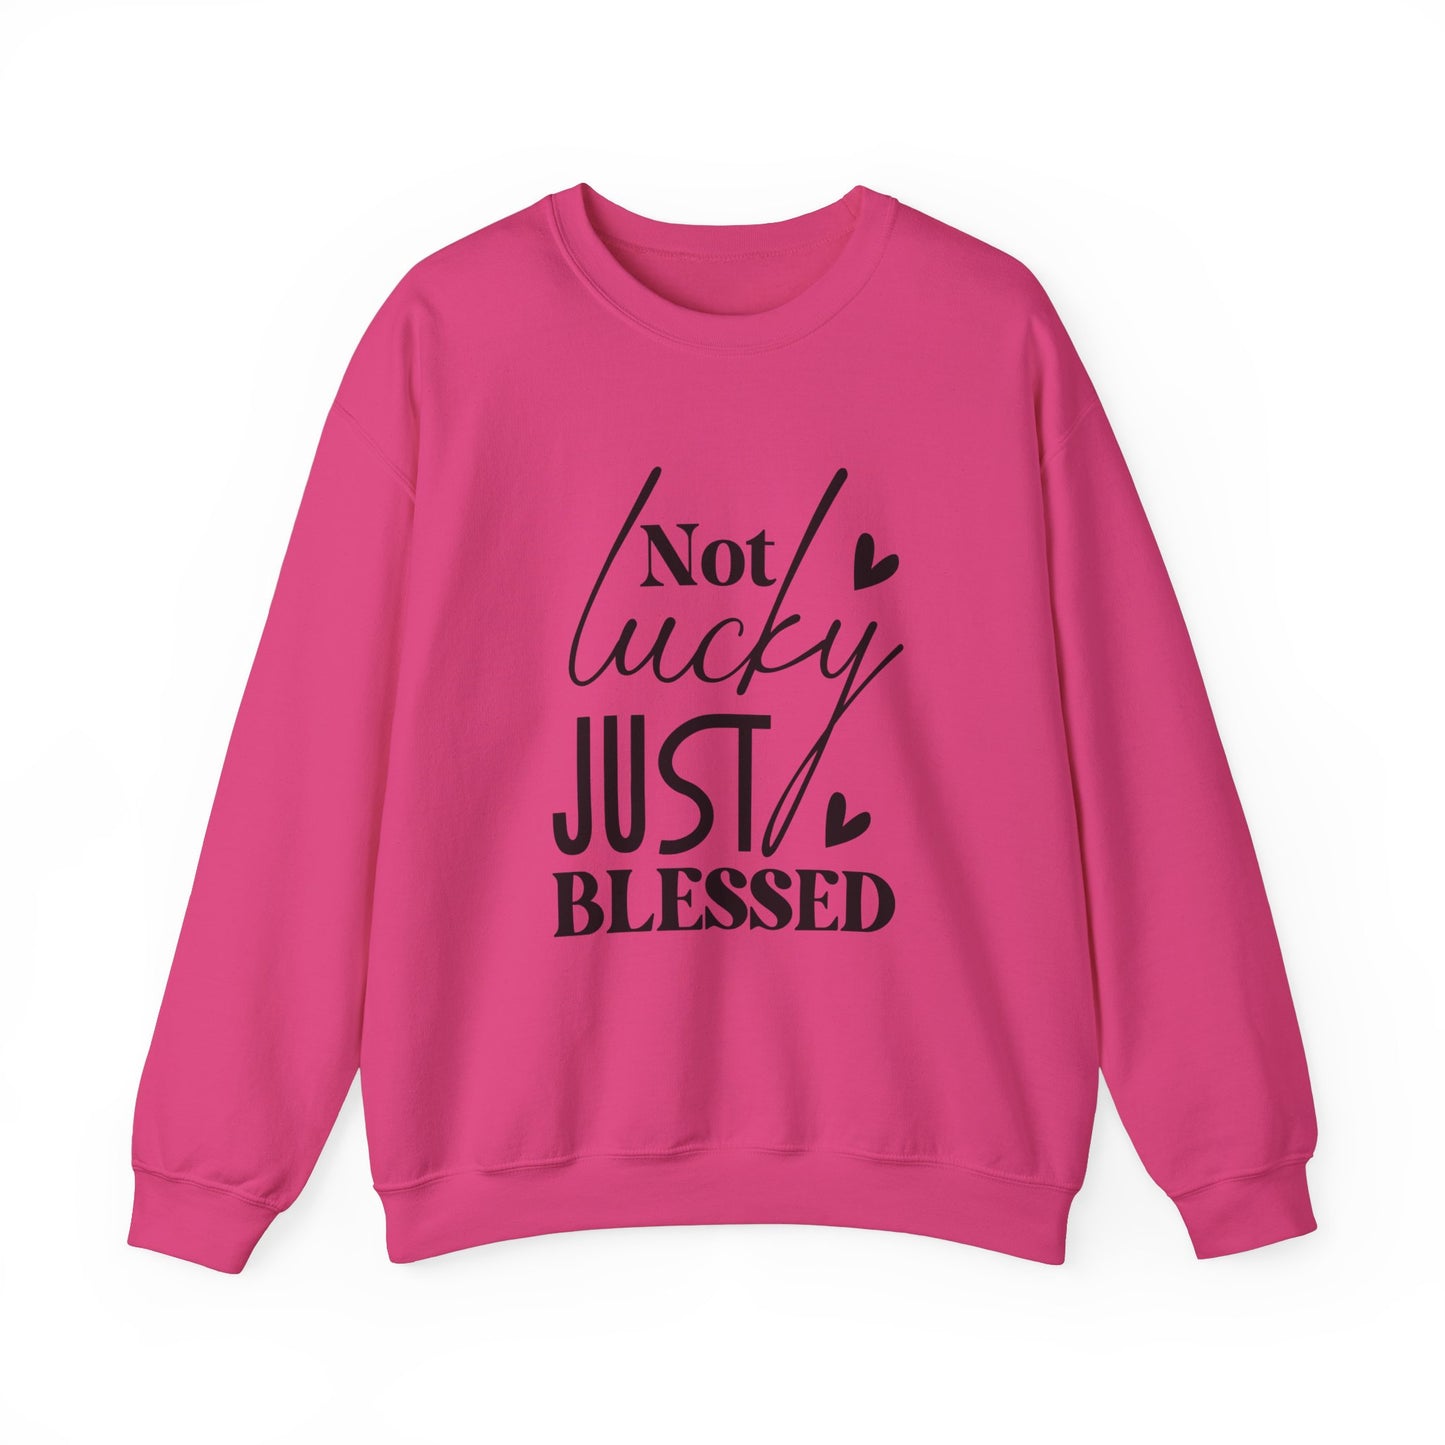 Just Blessed Women's Sweatshirt